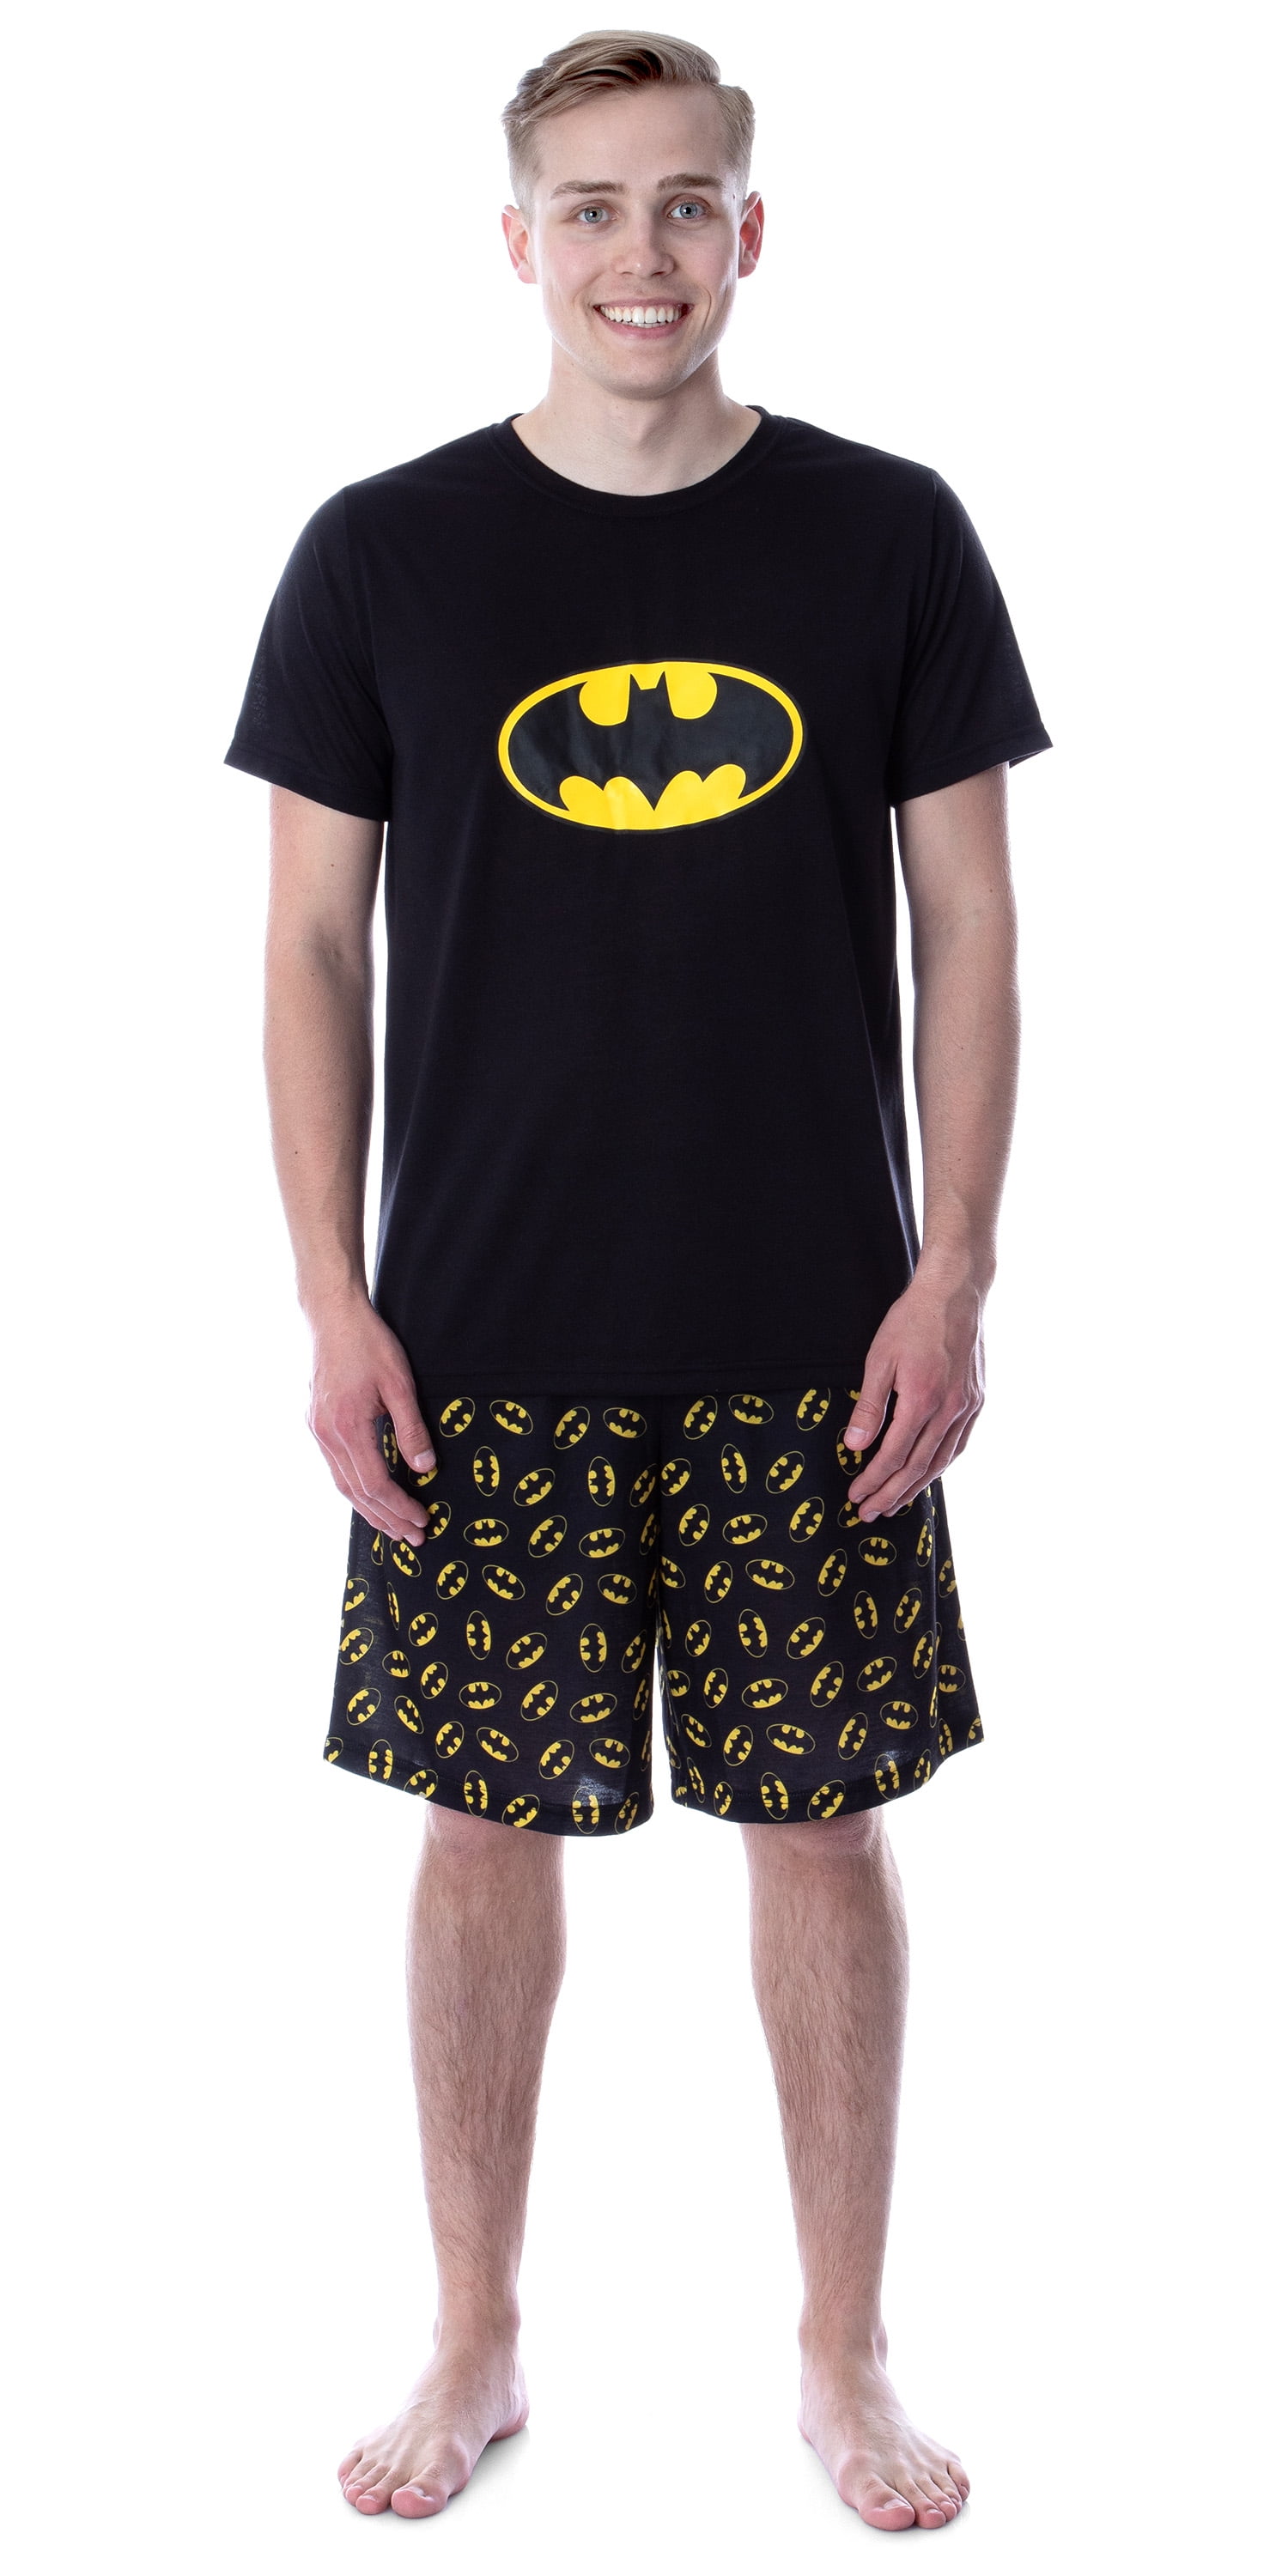 Lazy One Unisex Tee Sleep Shirt Bat moose Batman Black Yellow 